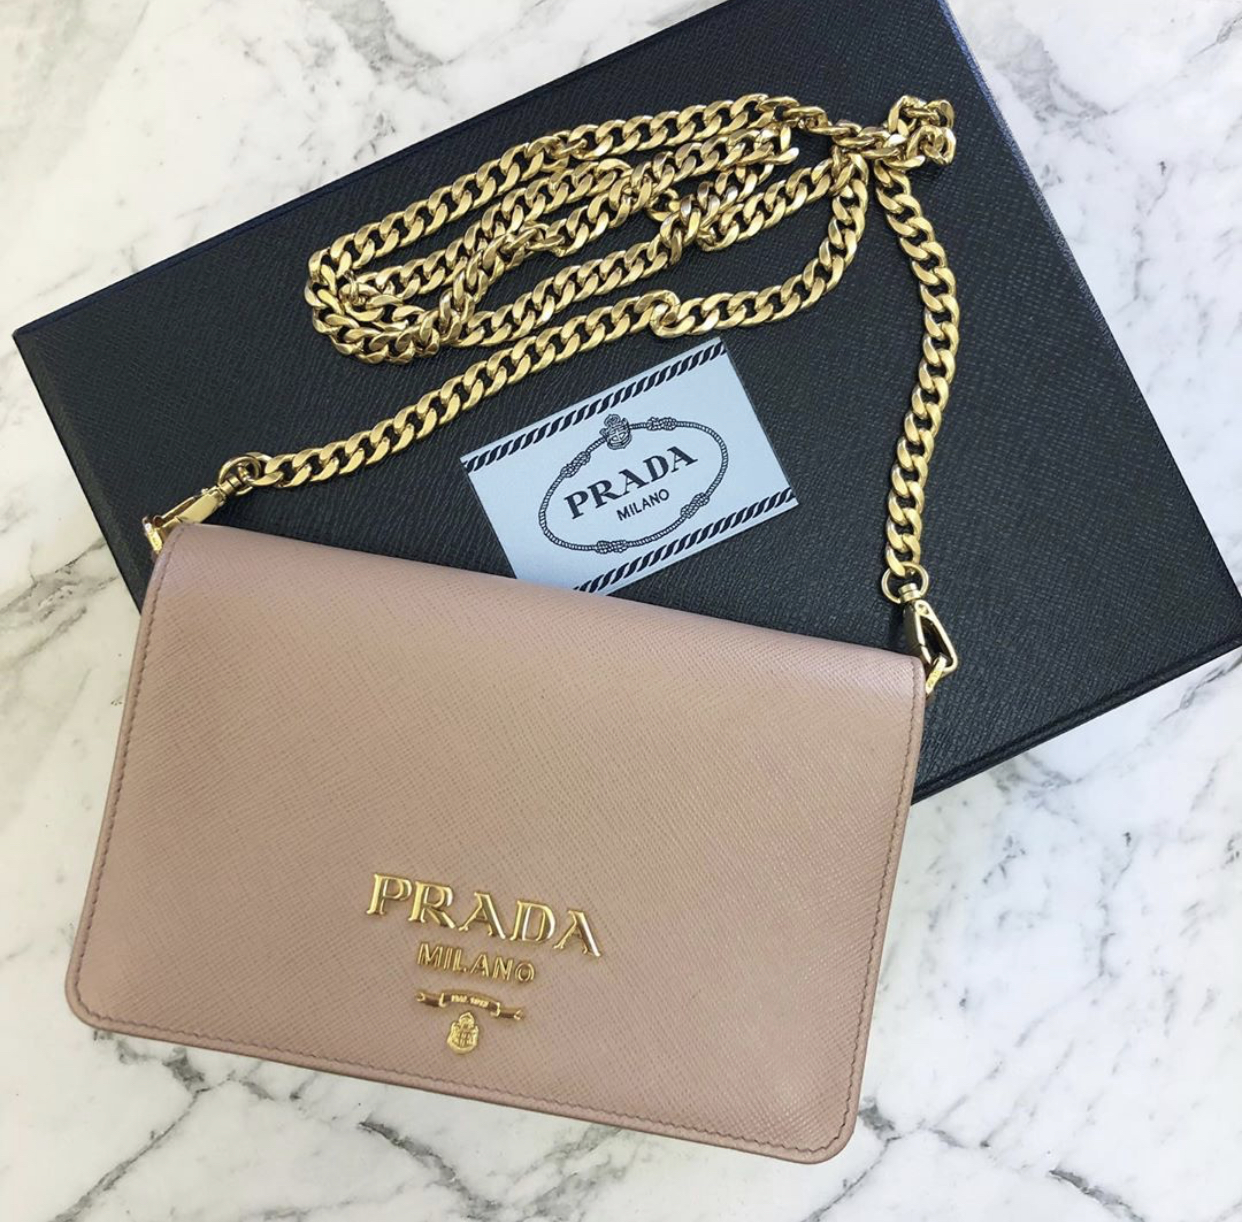 Picture  Prada wallet on chain, Bags, Prada handbags